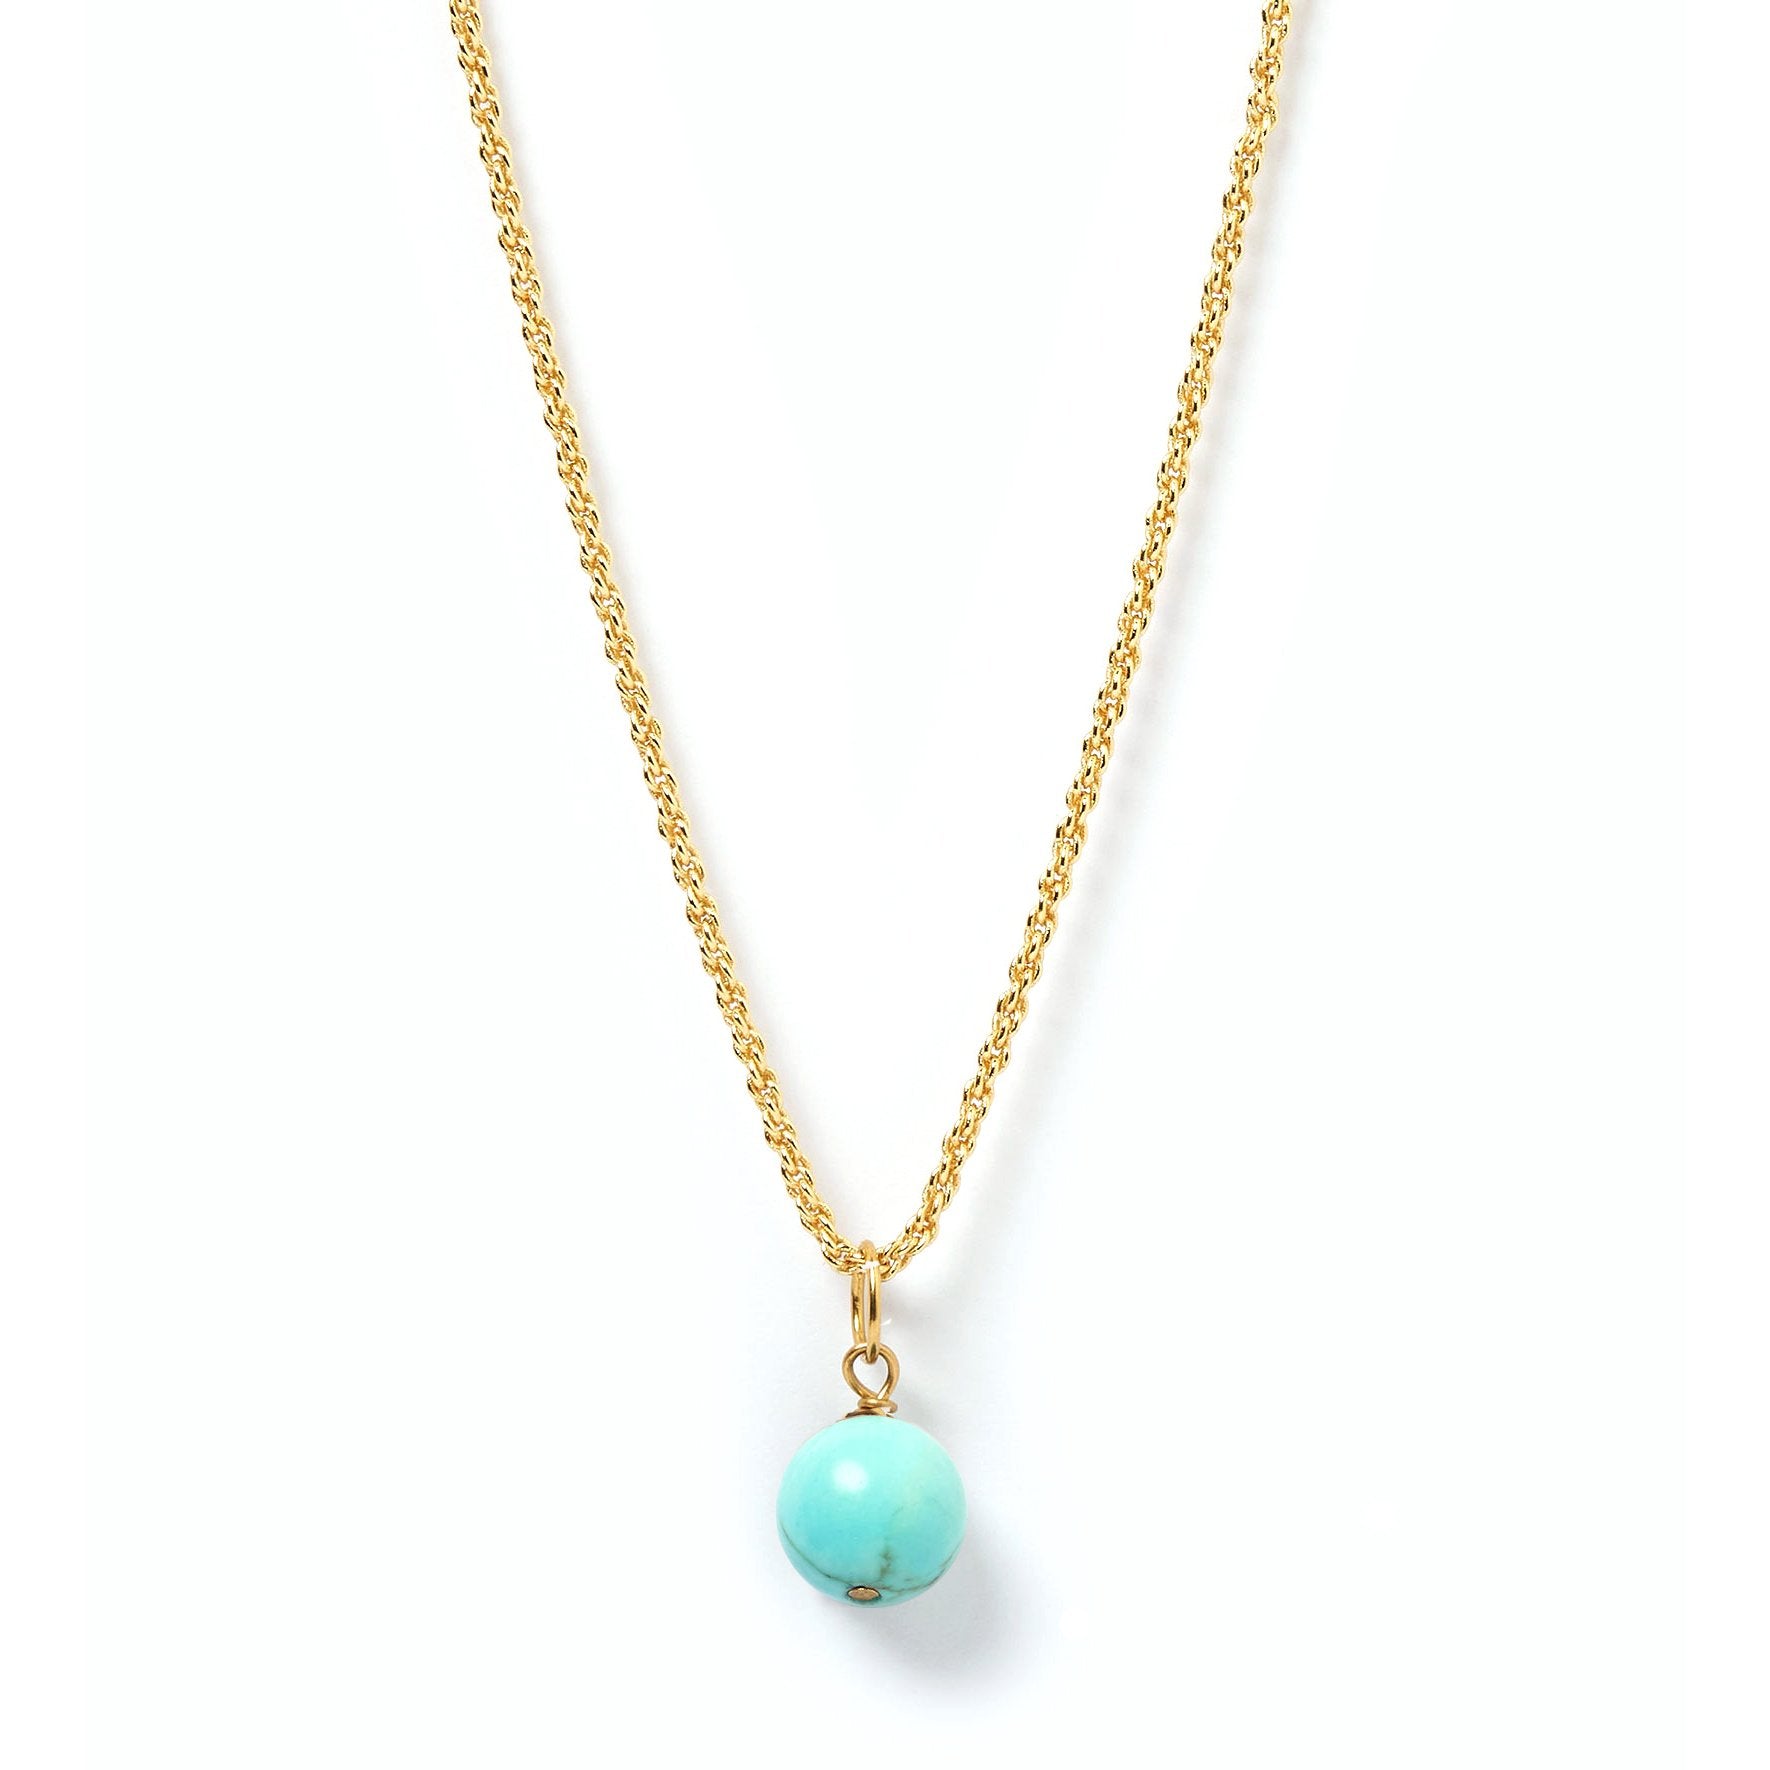 Kiki Crystal Pendant Necklace - Turquoise